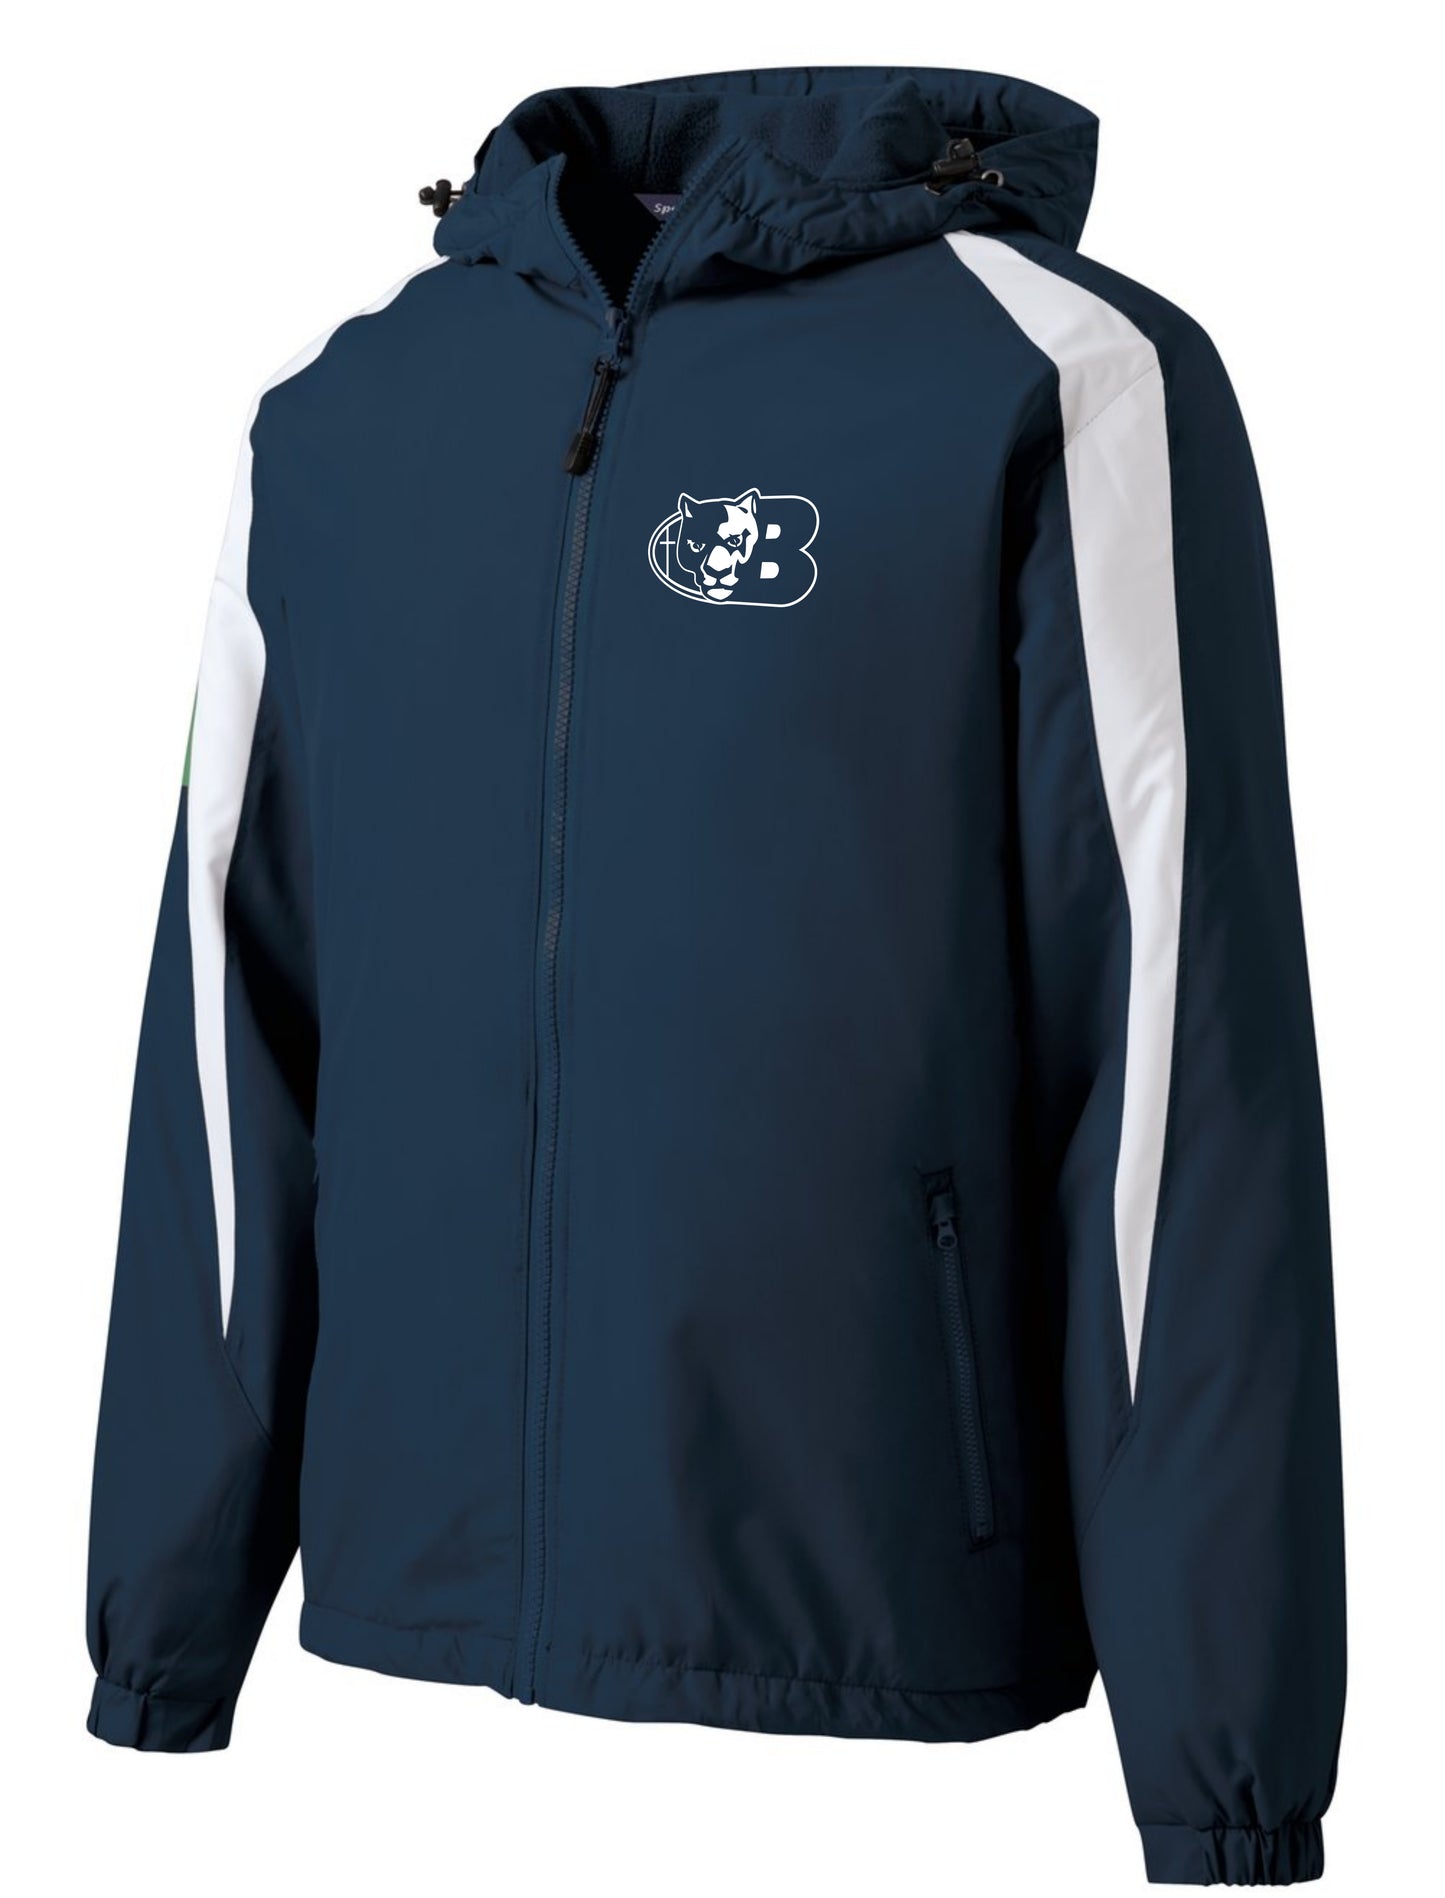 BCS Unisex Hooded Fleece Lined Color block - Adult Jacket